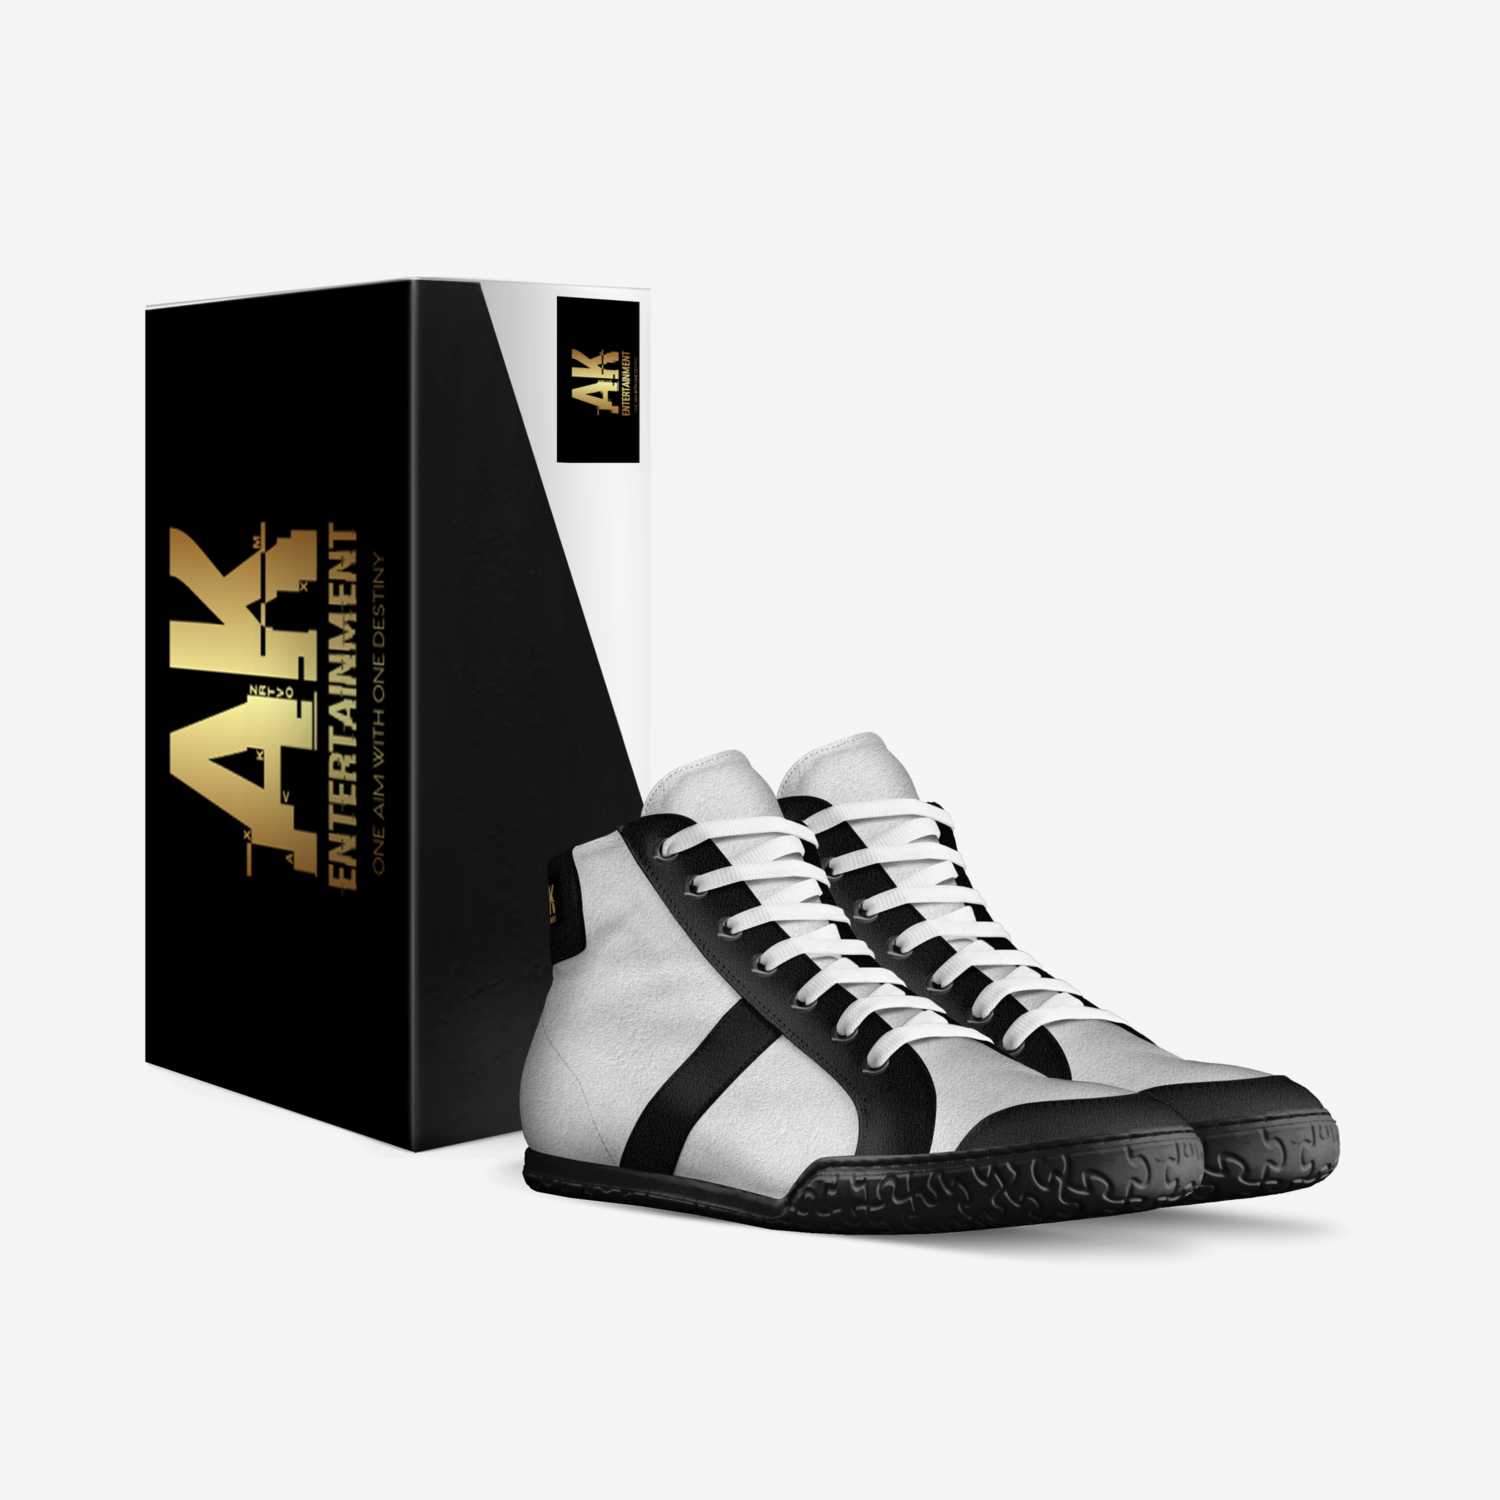 AK By Amadi Kuri custom made in Italy shoes by Amadi Kuri | Box view